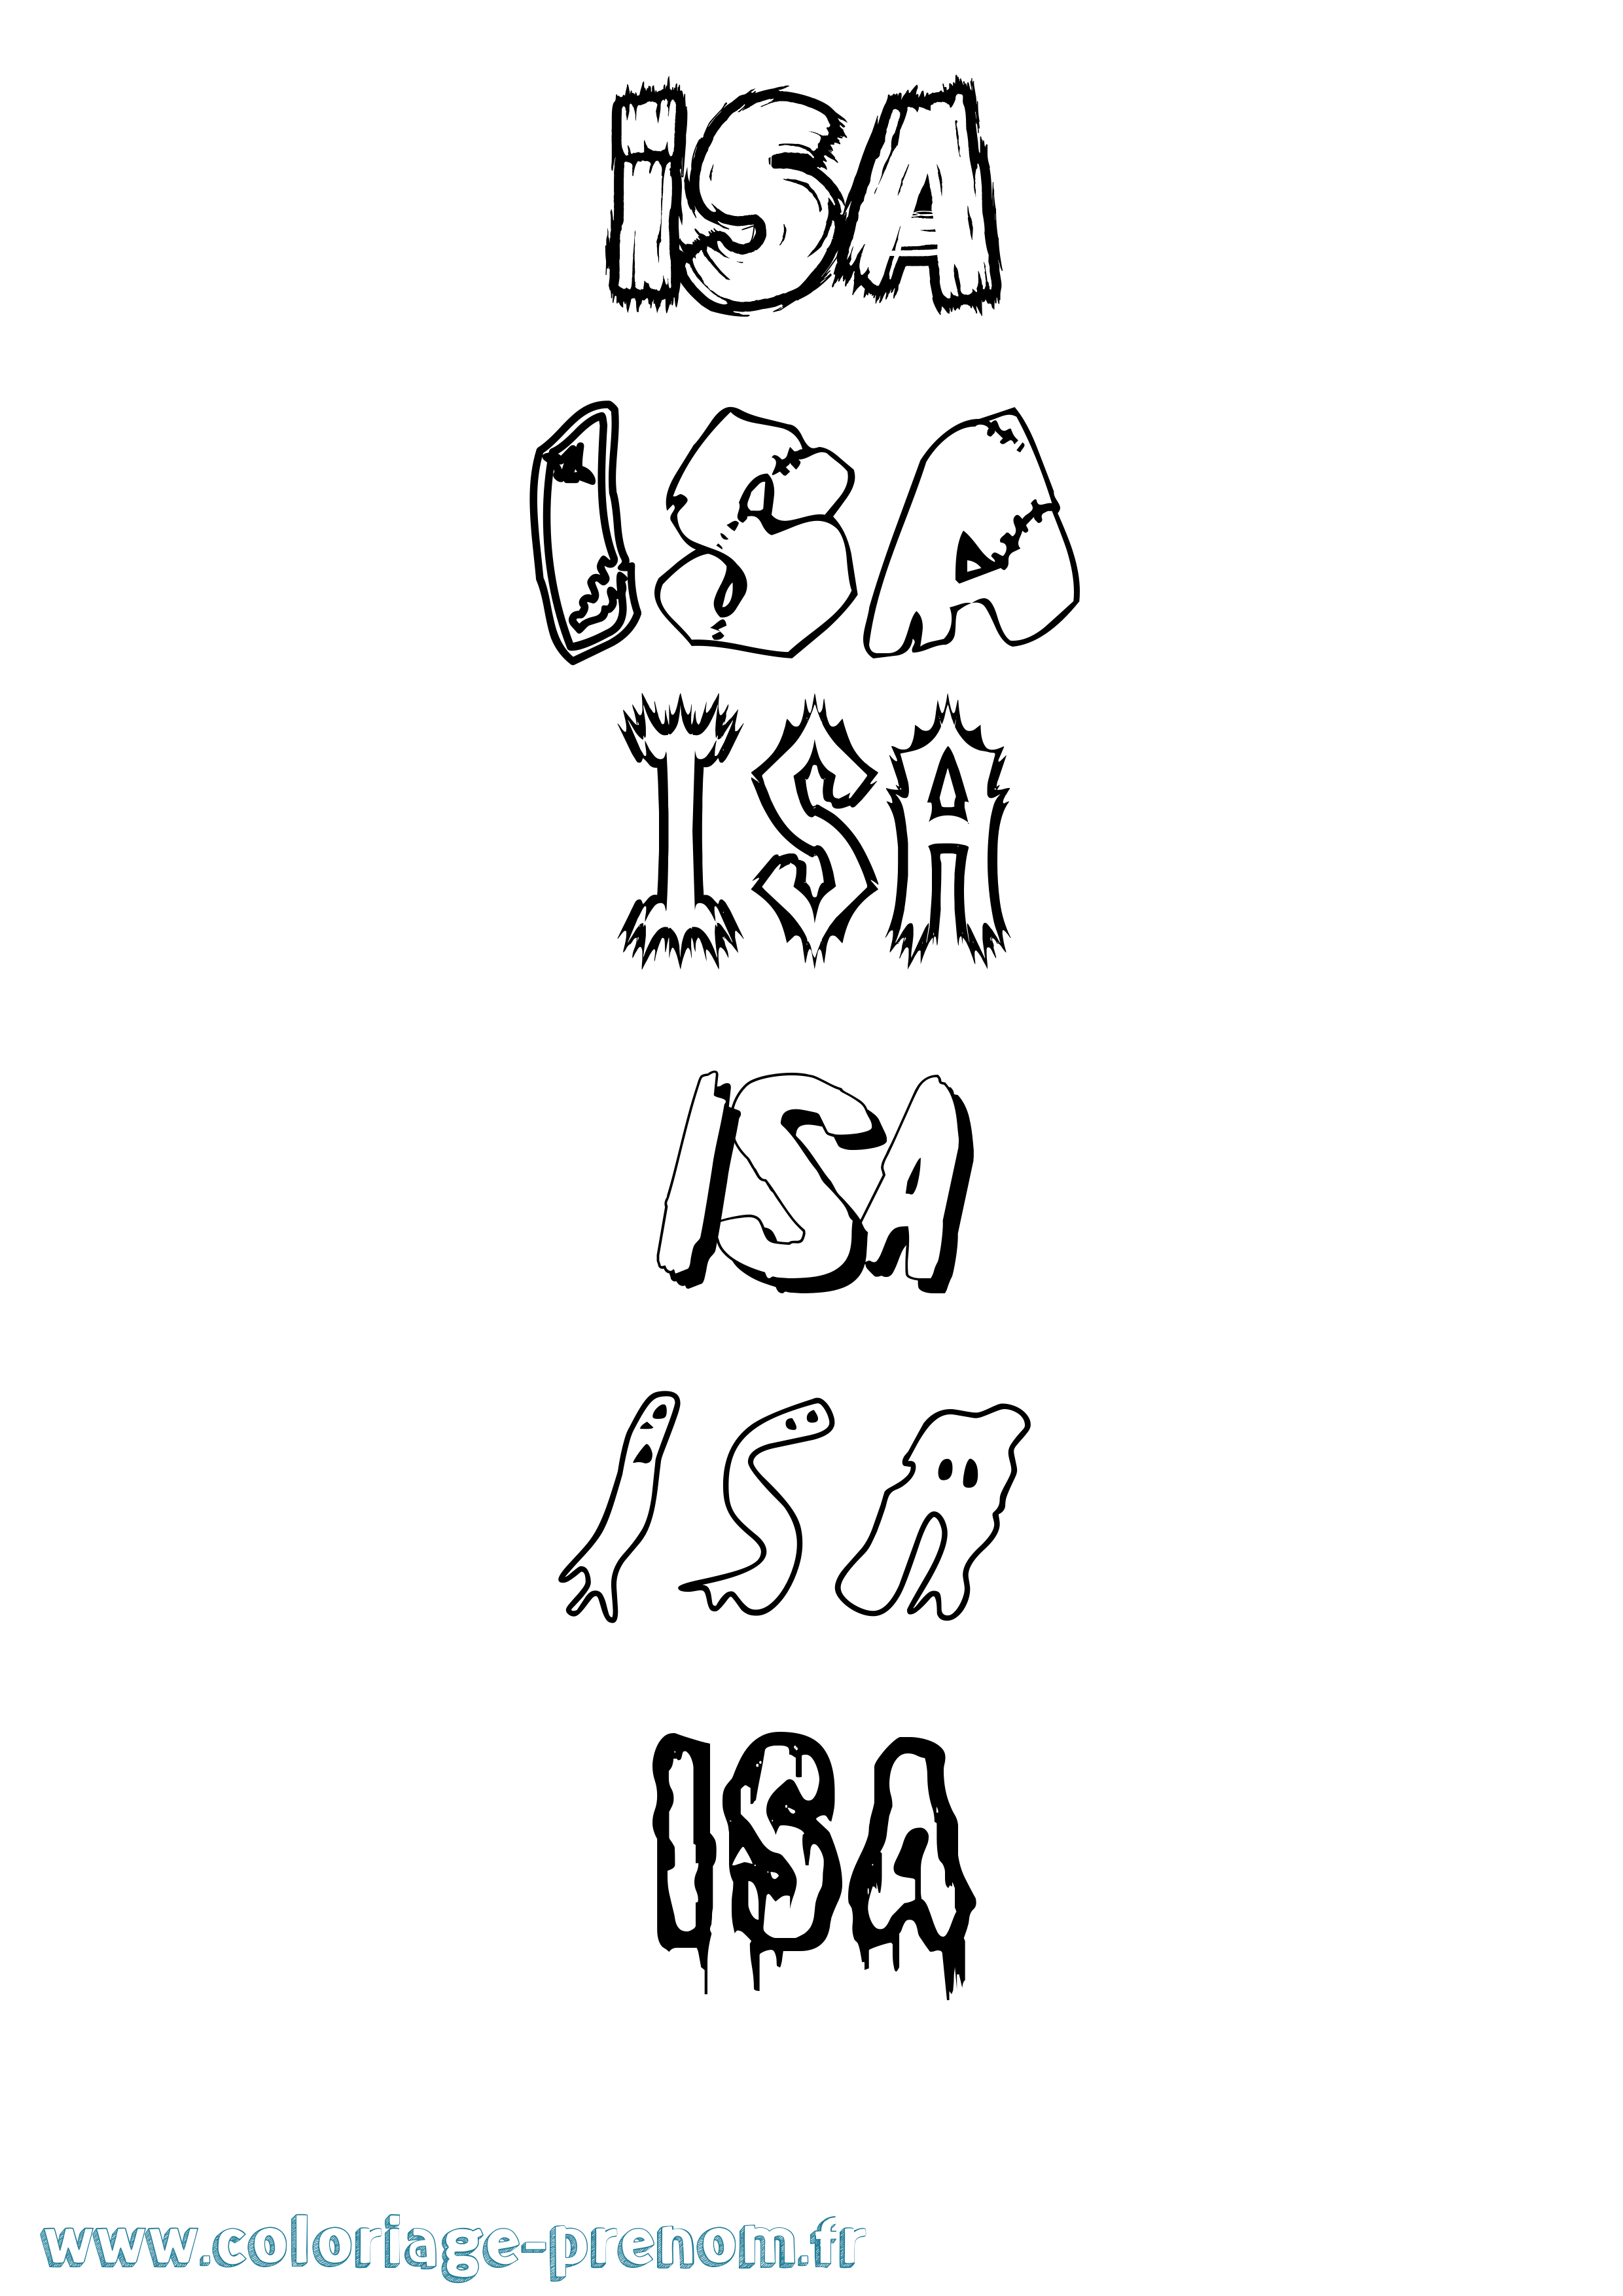 Coloriage prénom Isa Frisson